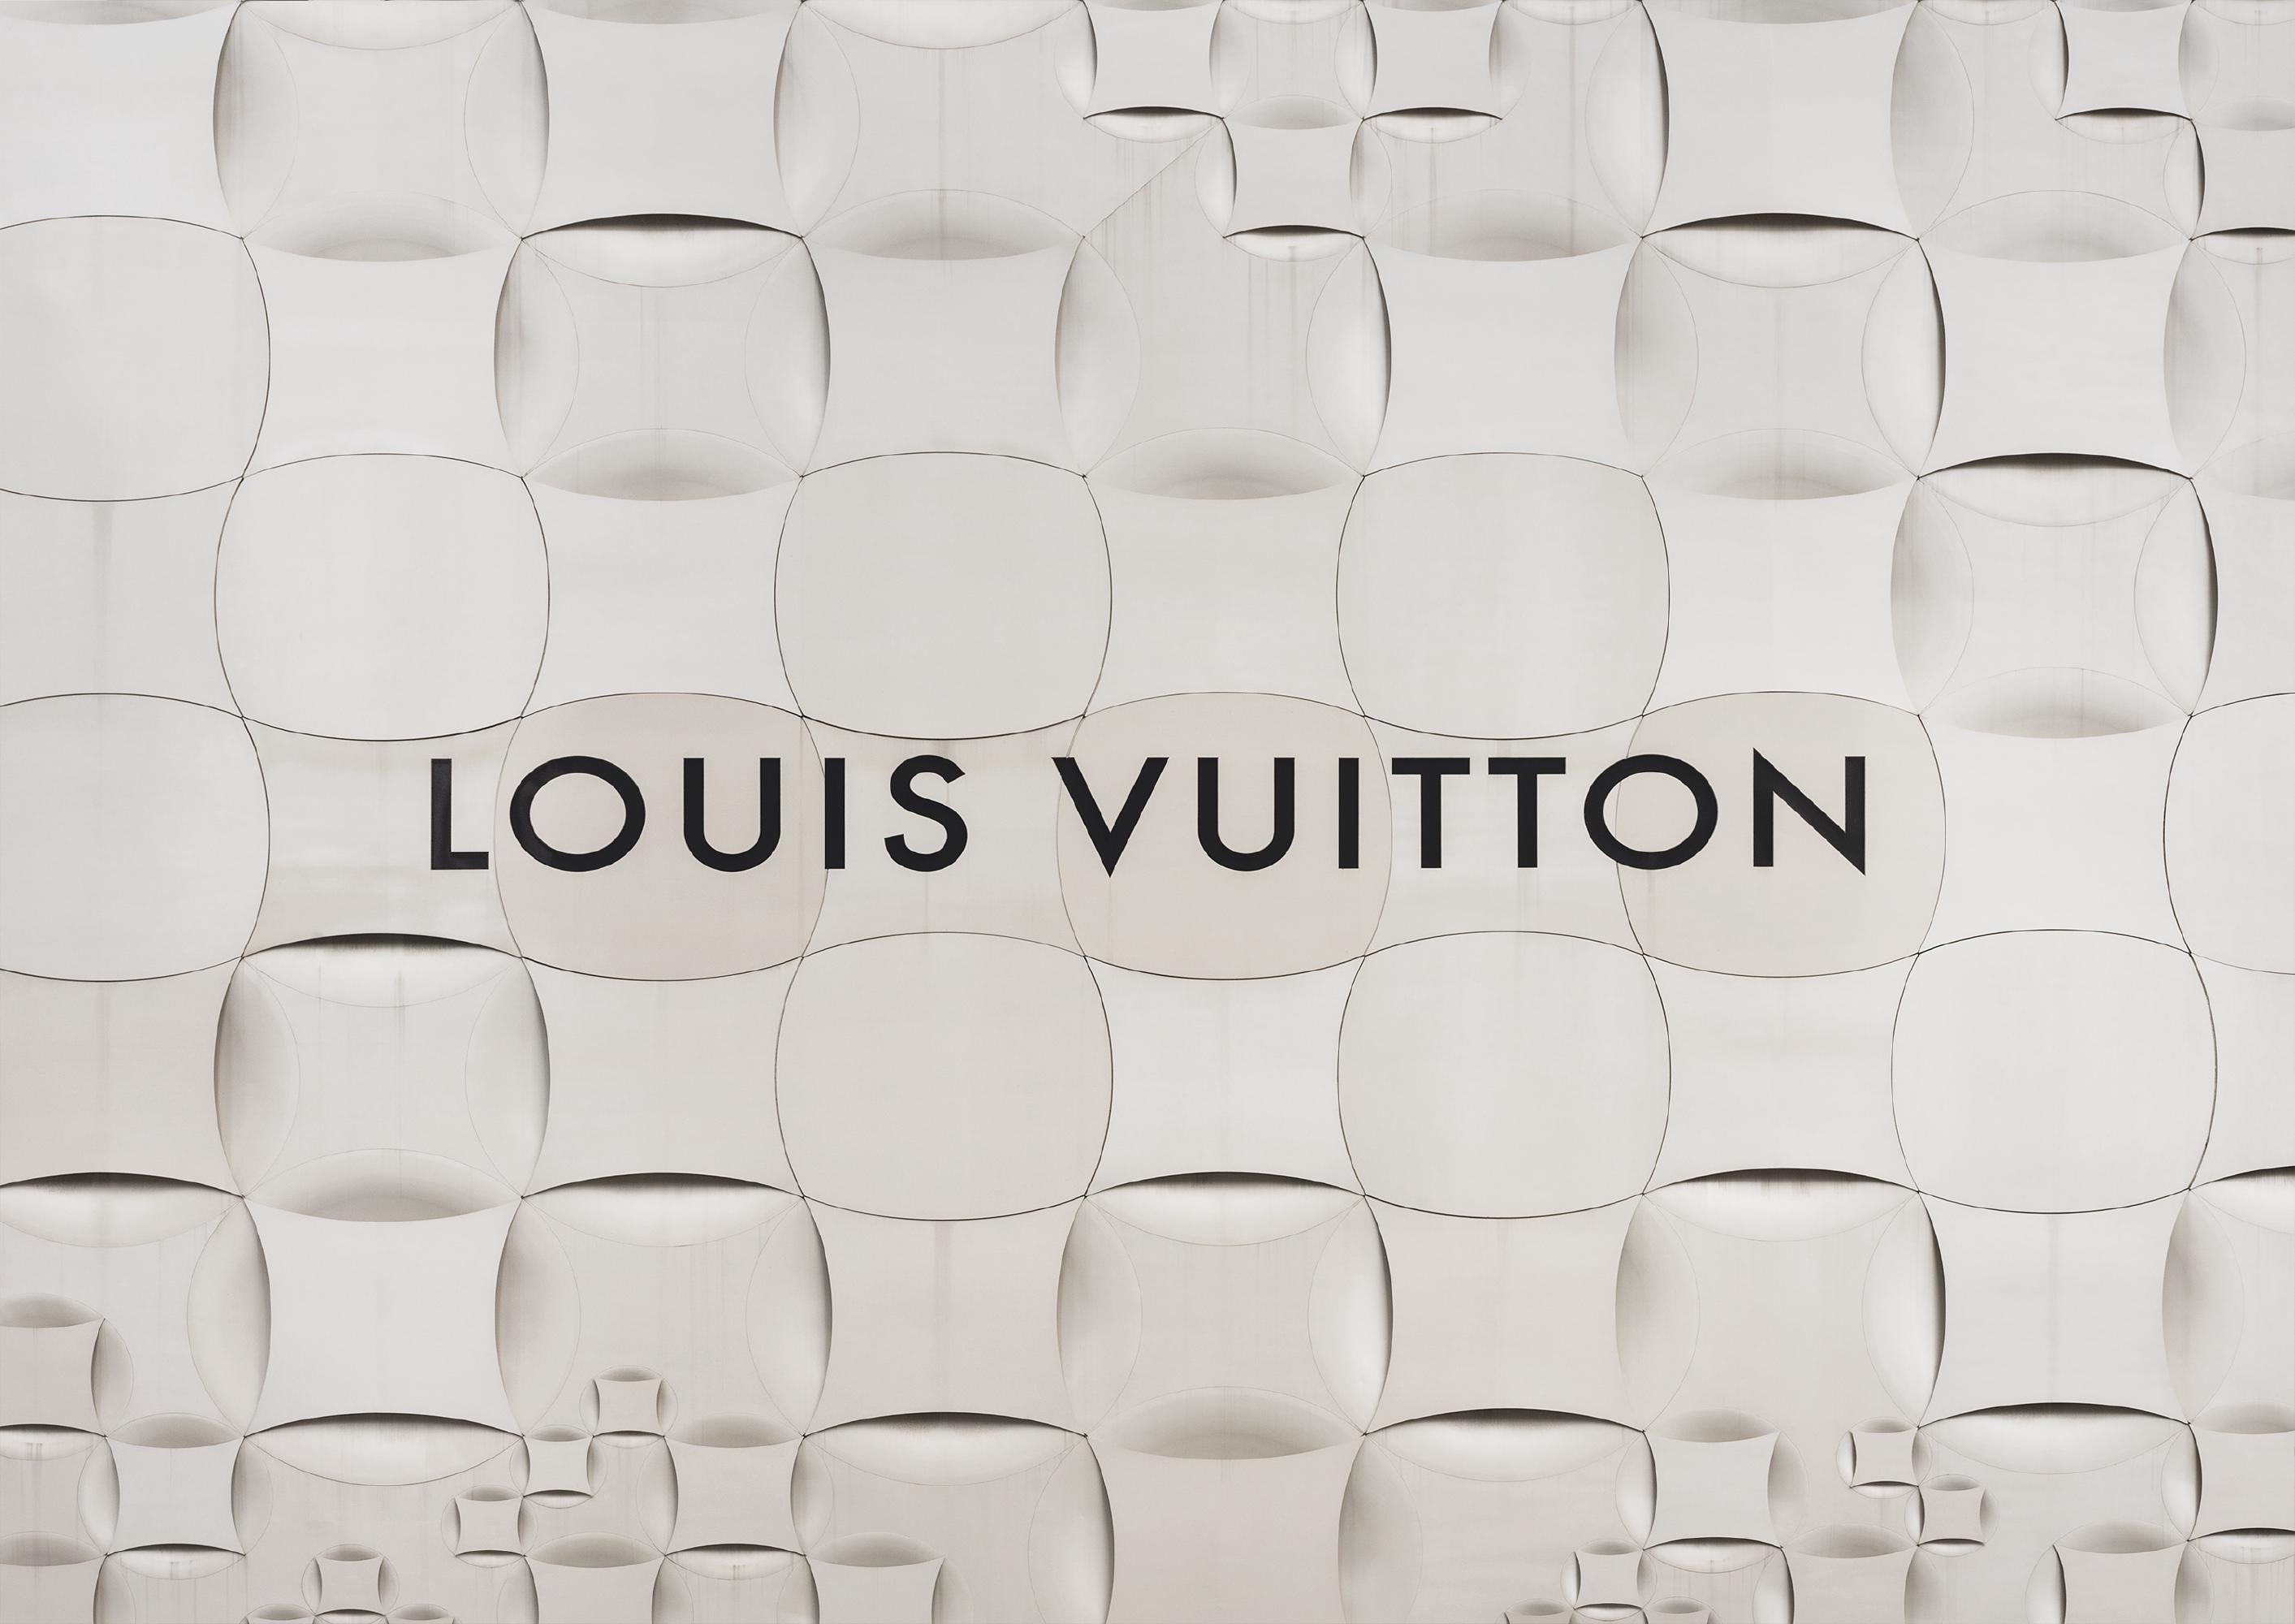 Louis Vuitton Wallpaper For Sale In Ghana